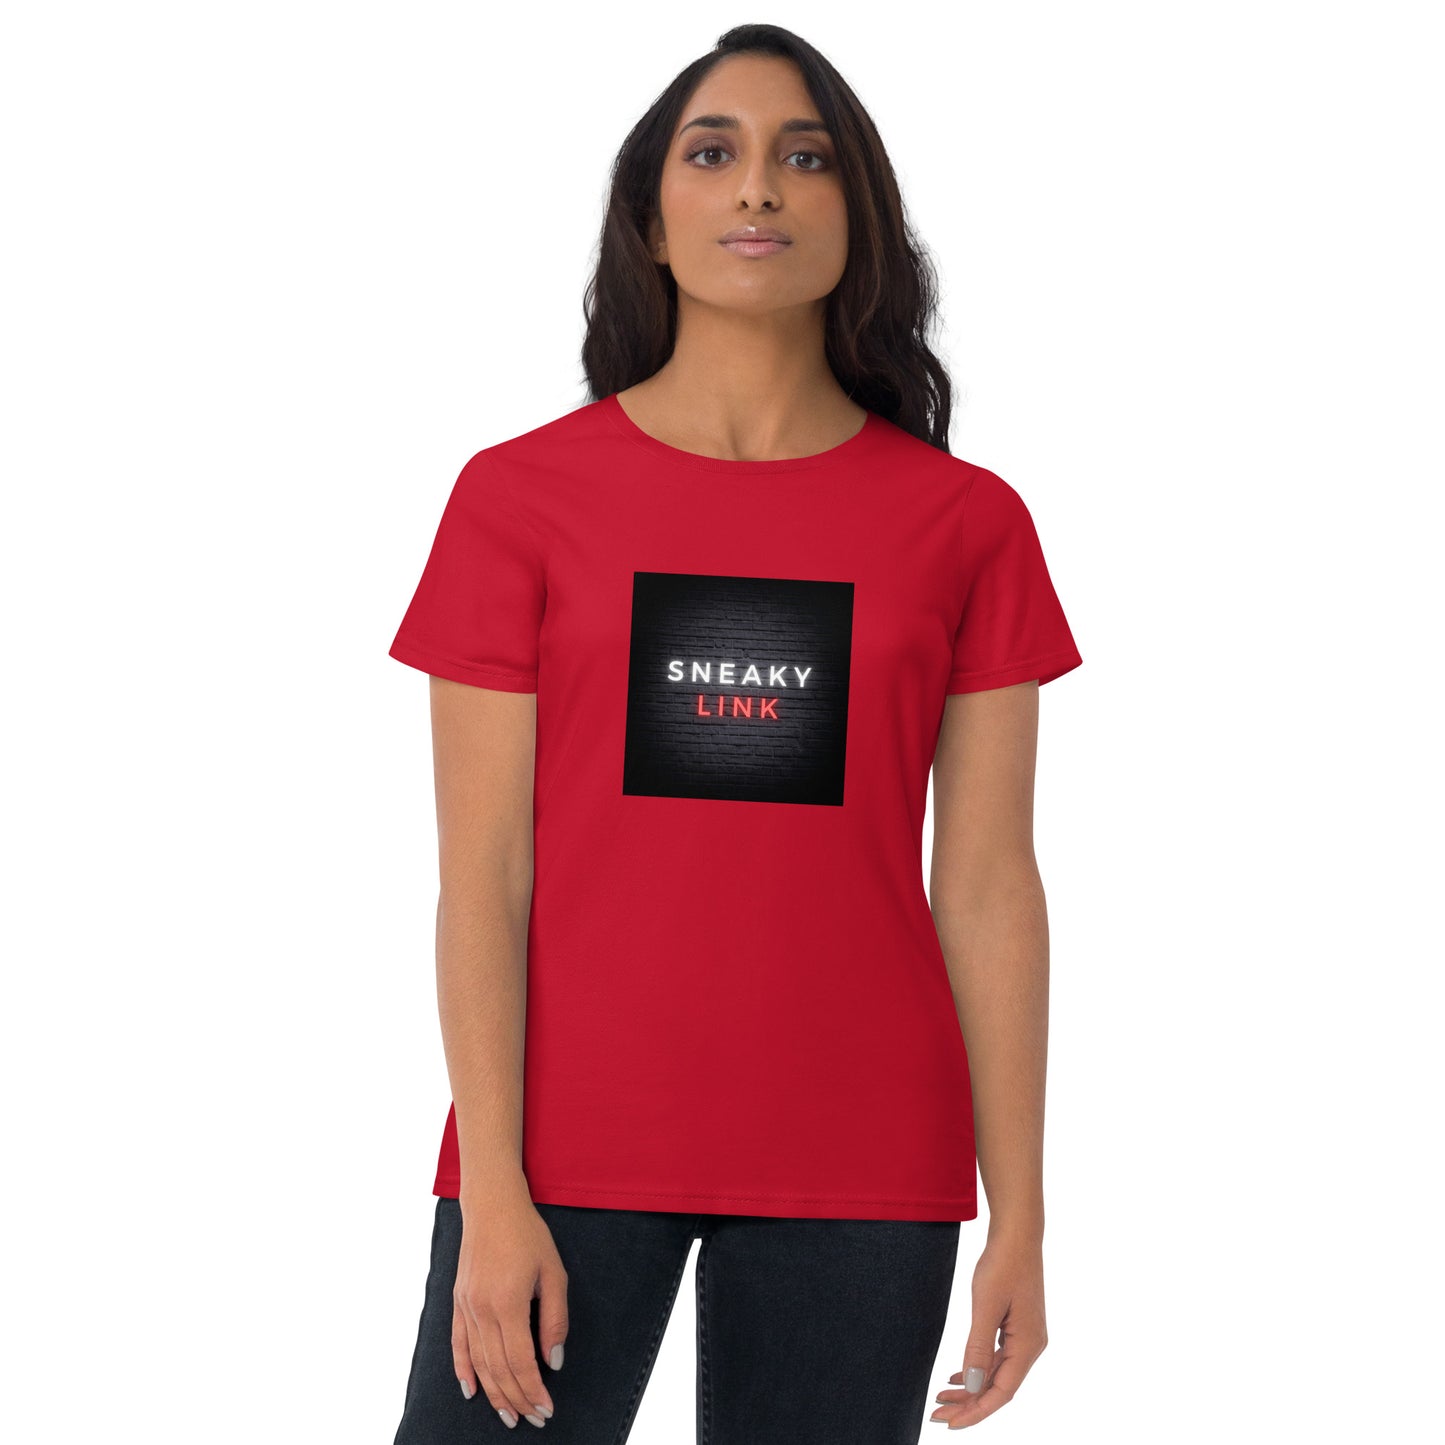 SNEAKY LINK Women's short sleeve t-shirt